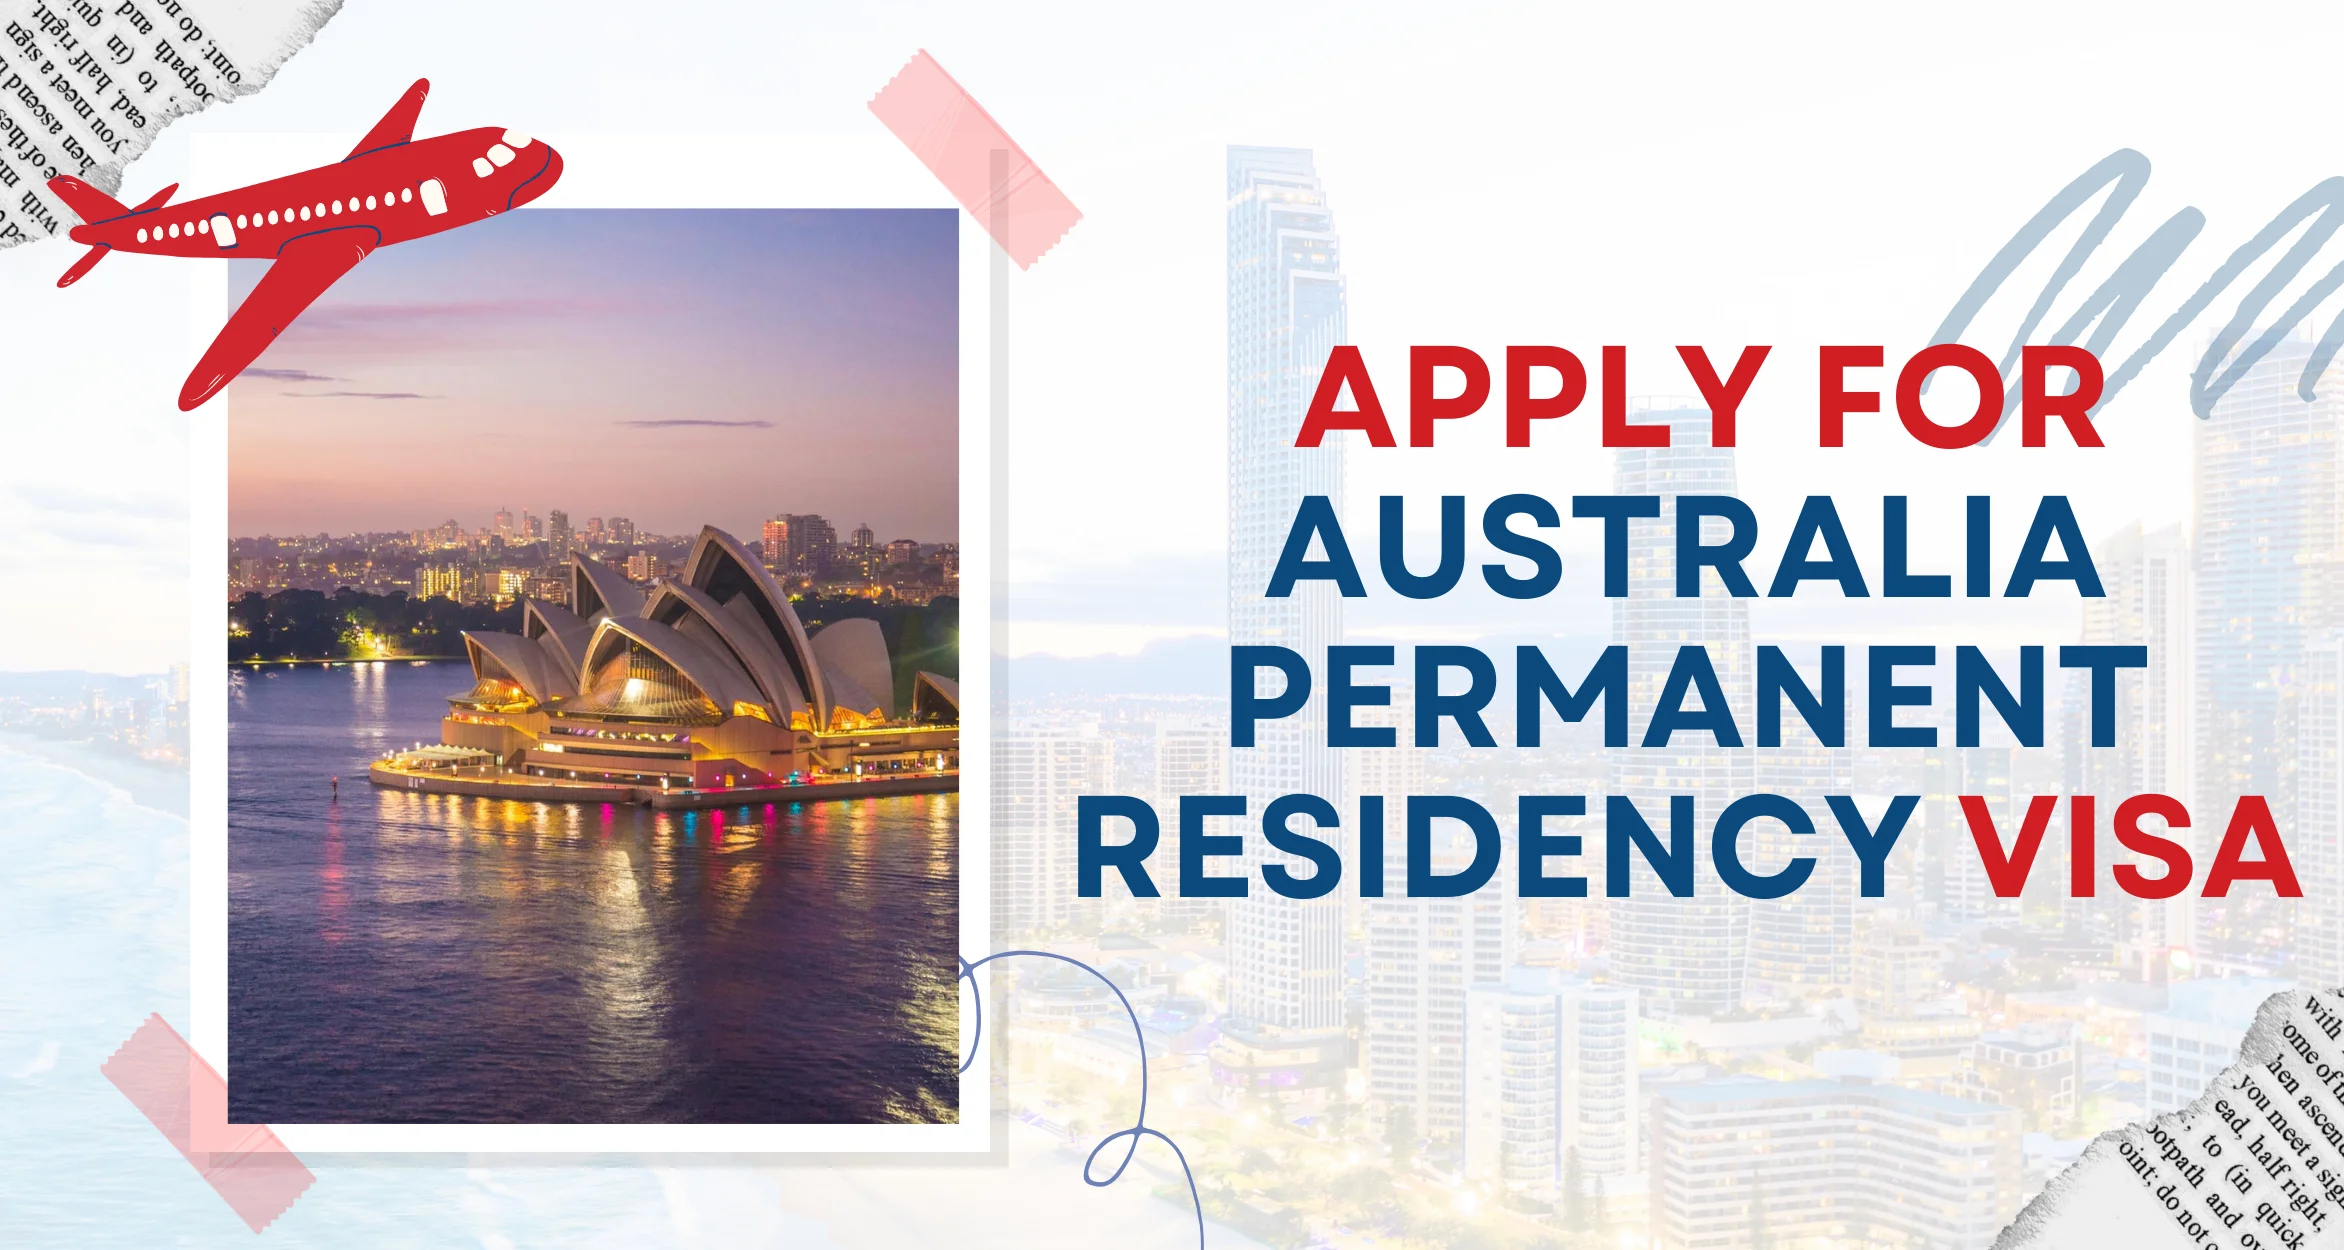 How to apply for Australia Permanent residency visa?